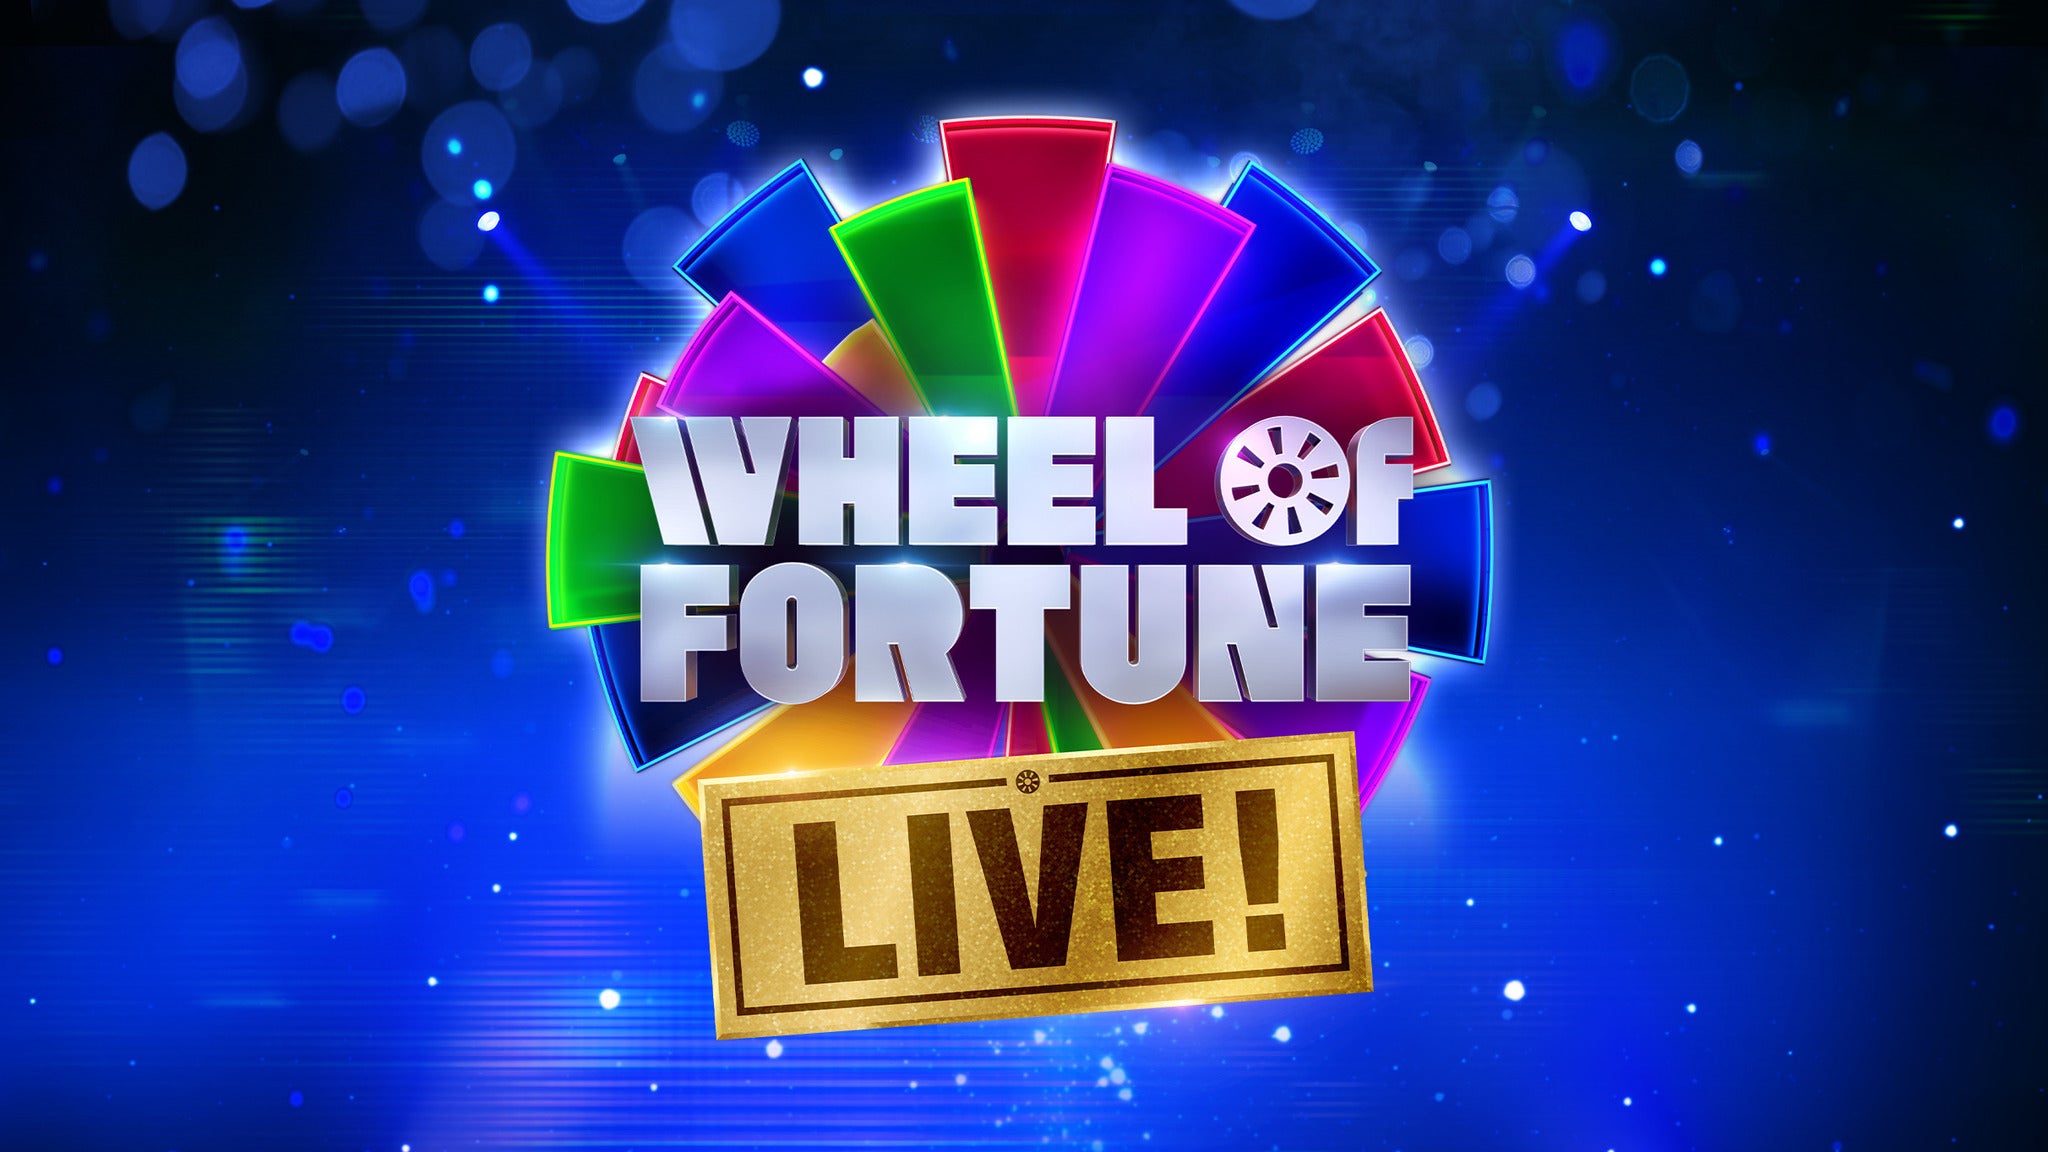 Wheel Of Fortune Live! presale password